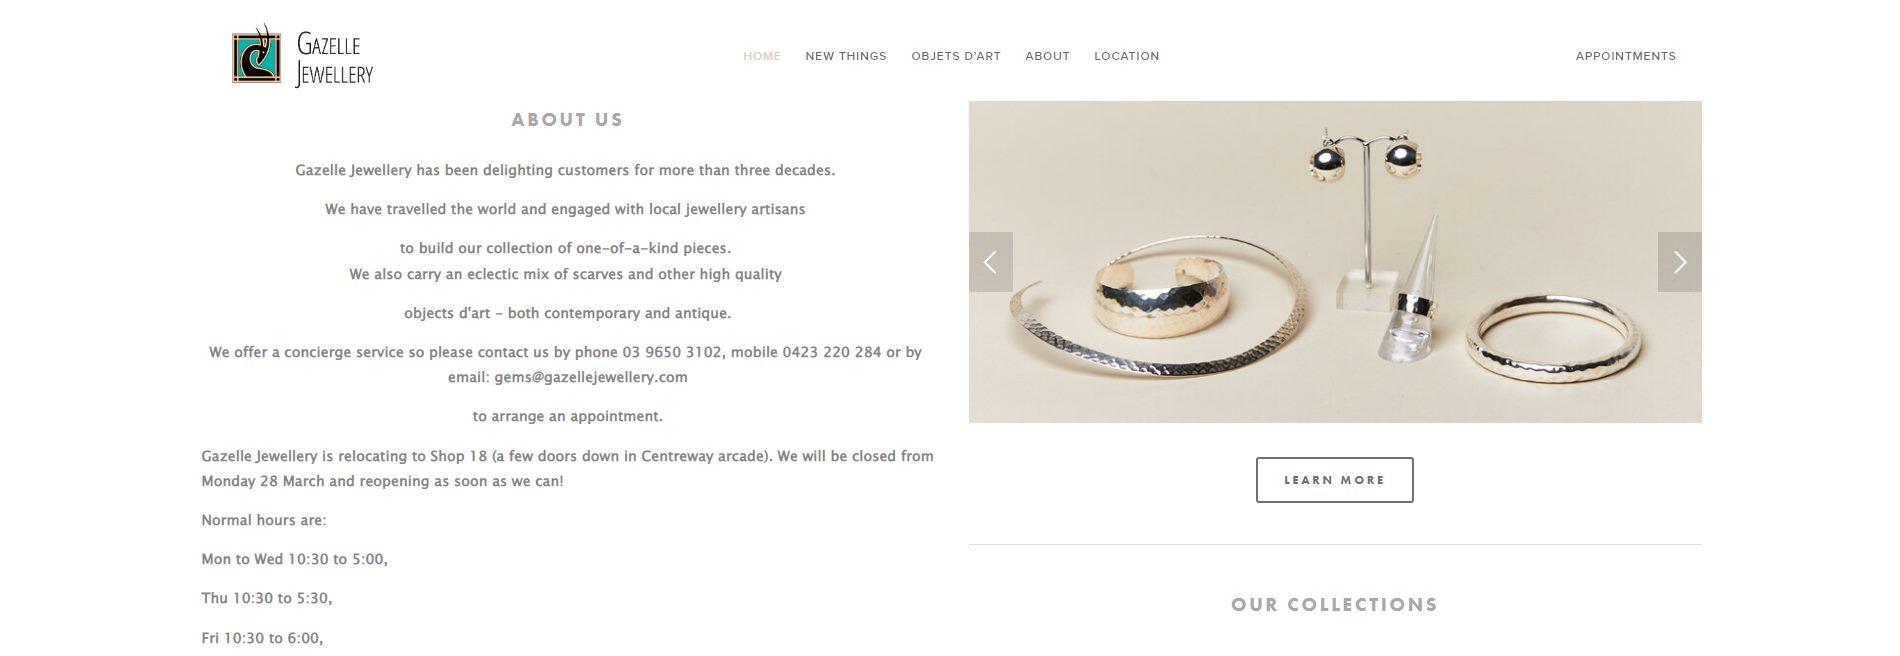 gazelle jewellery engagement rings & wedding band shop melbourne